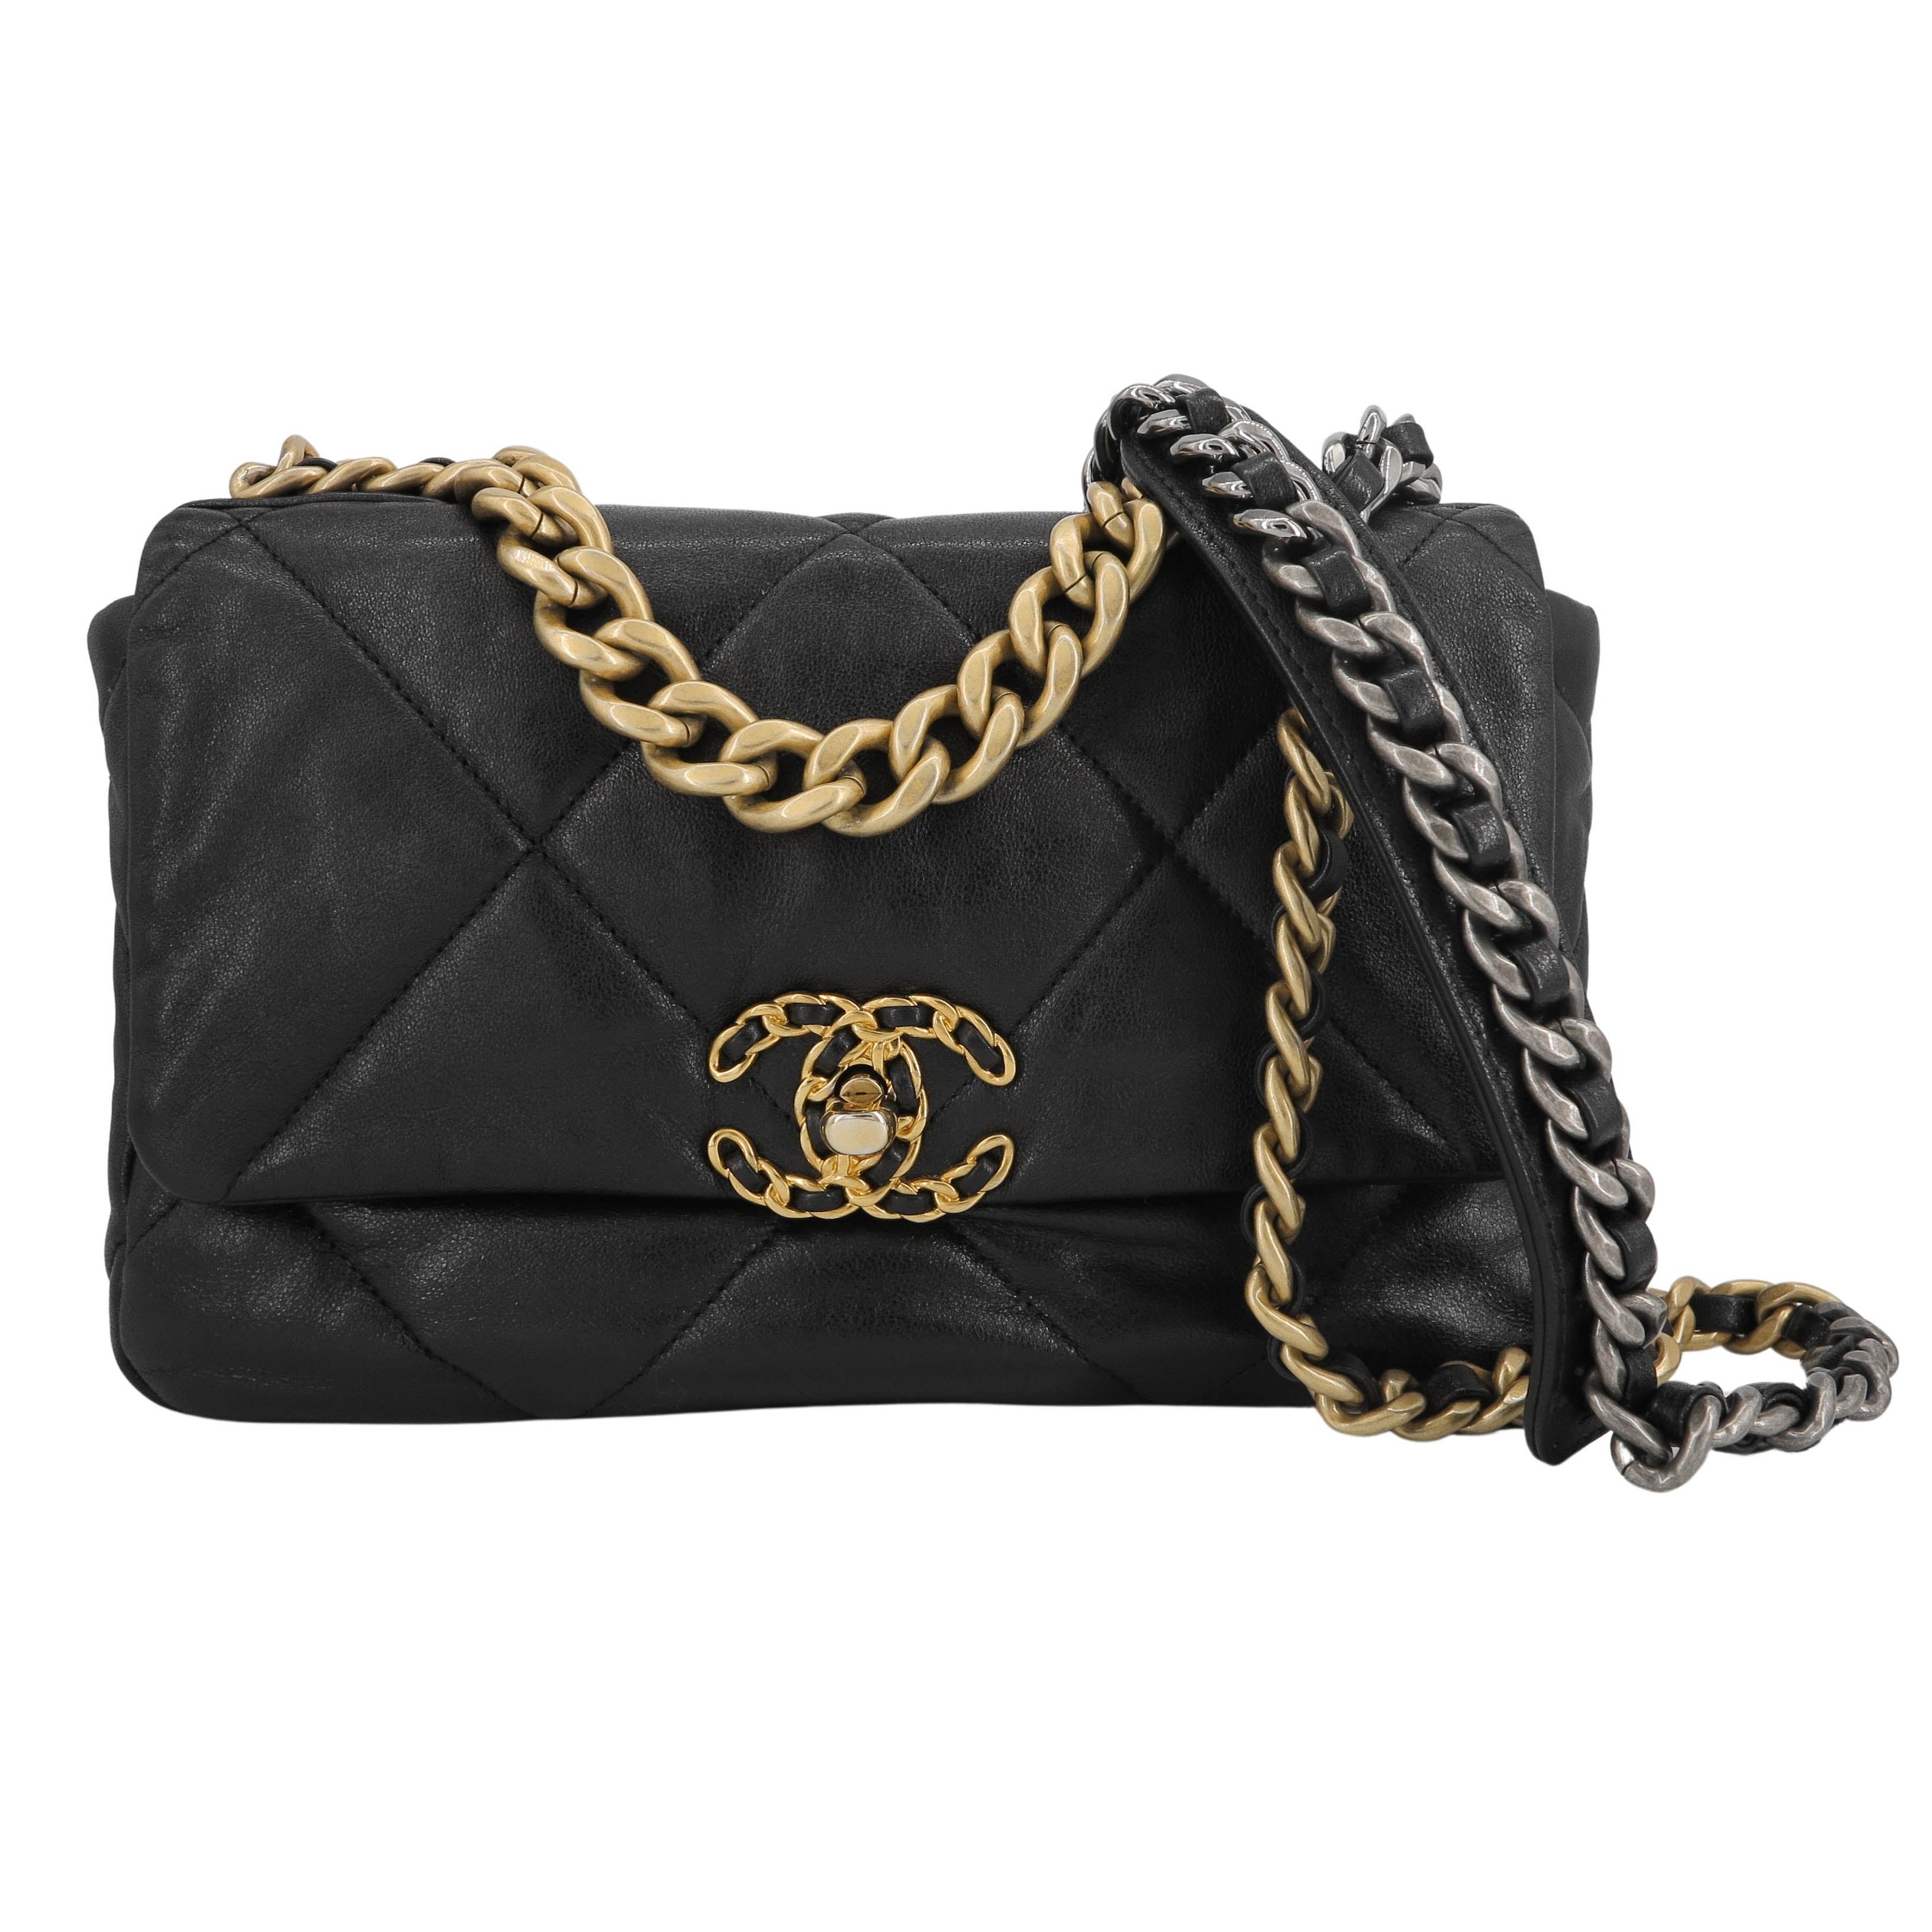 BAGS | Dearluxe - Authentic Luxury Handbags u0026 Accessories